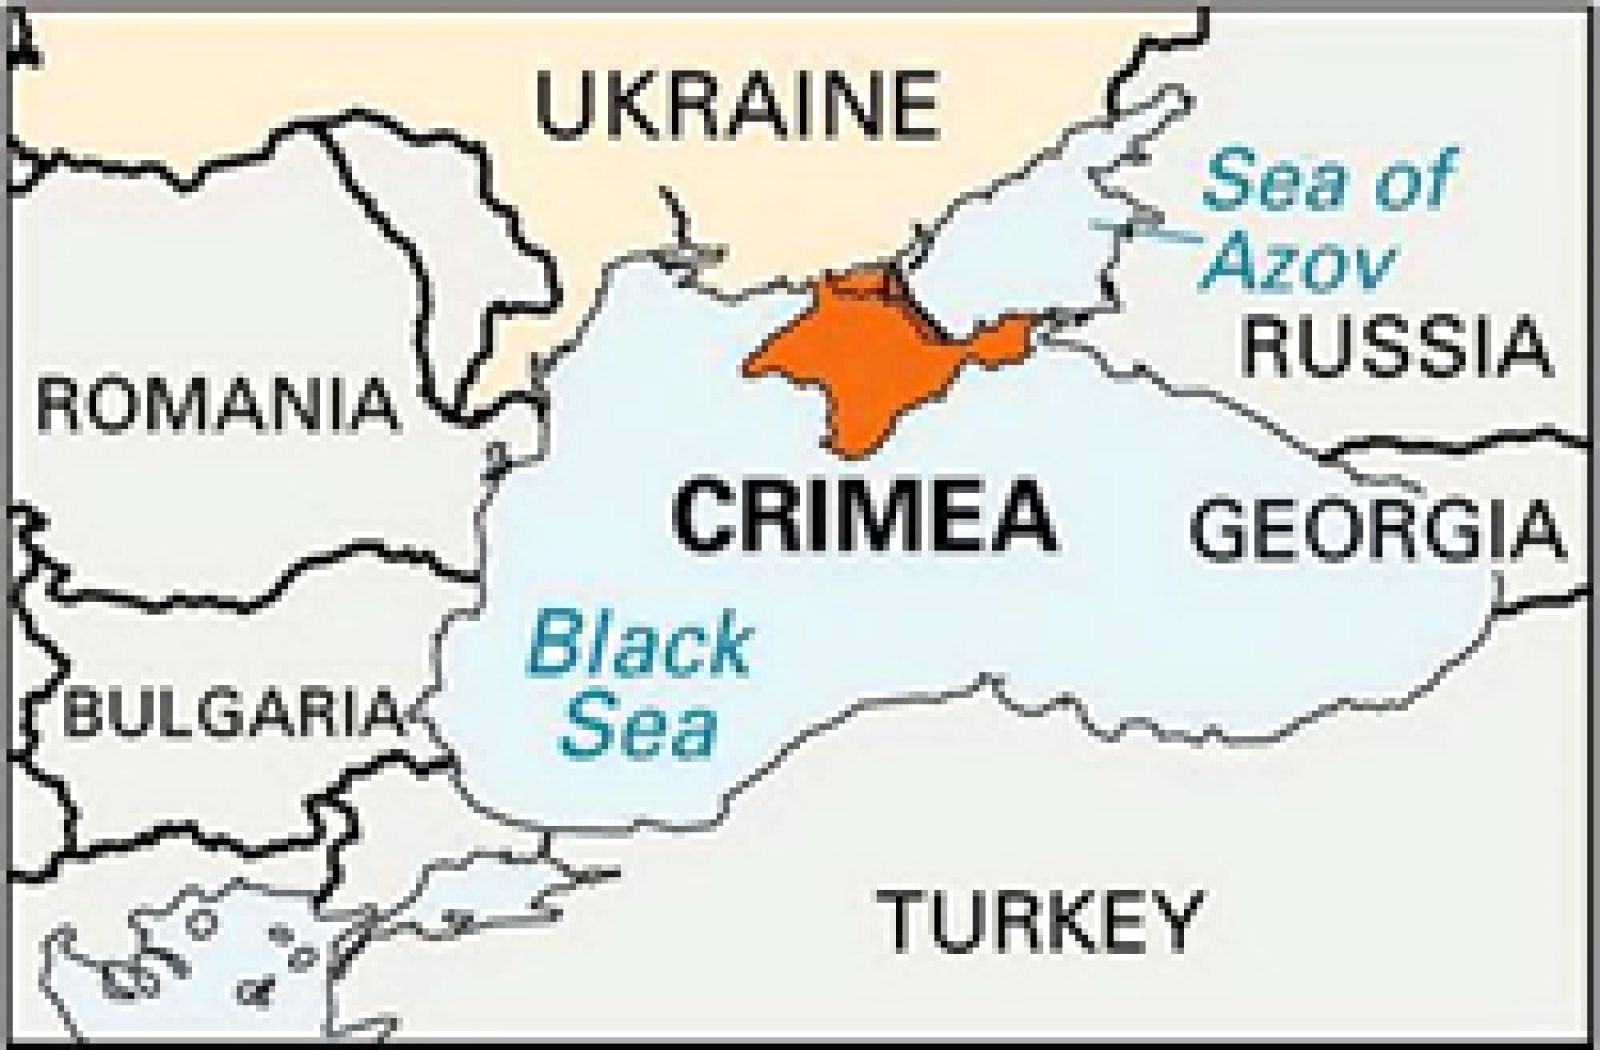 NDI Denounces the Occupation of Crimea